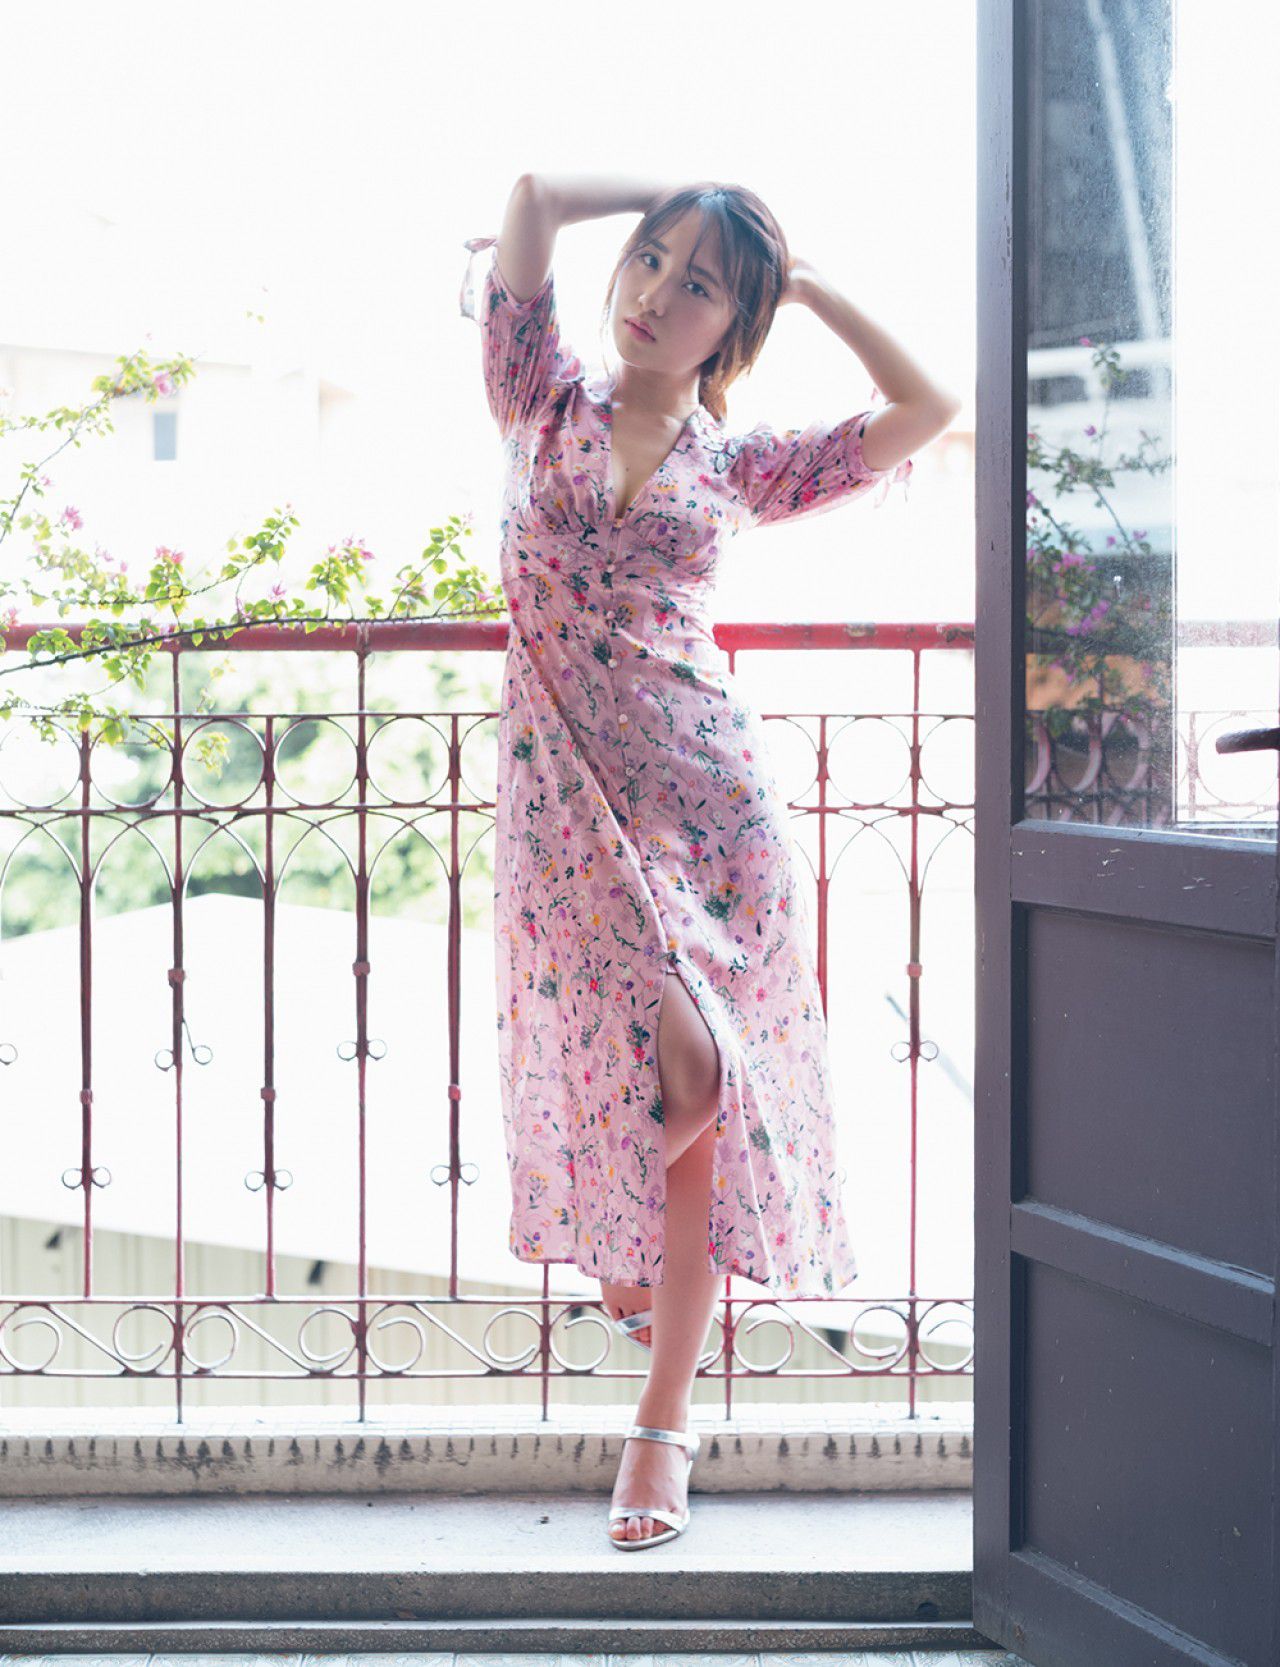 [FRIDAY] Takahashi Juri "AKB48の "美バスト"" photo Page 6 No.168aa5